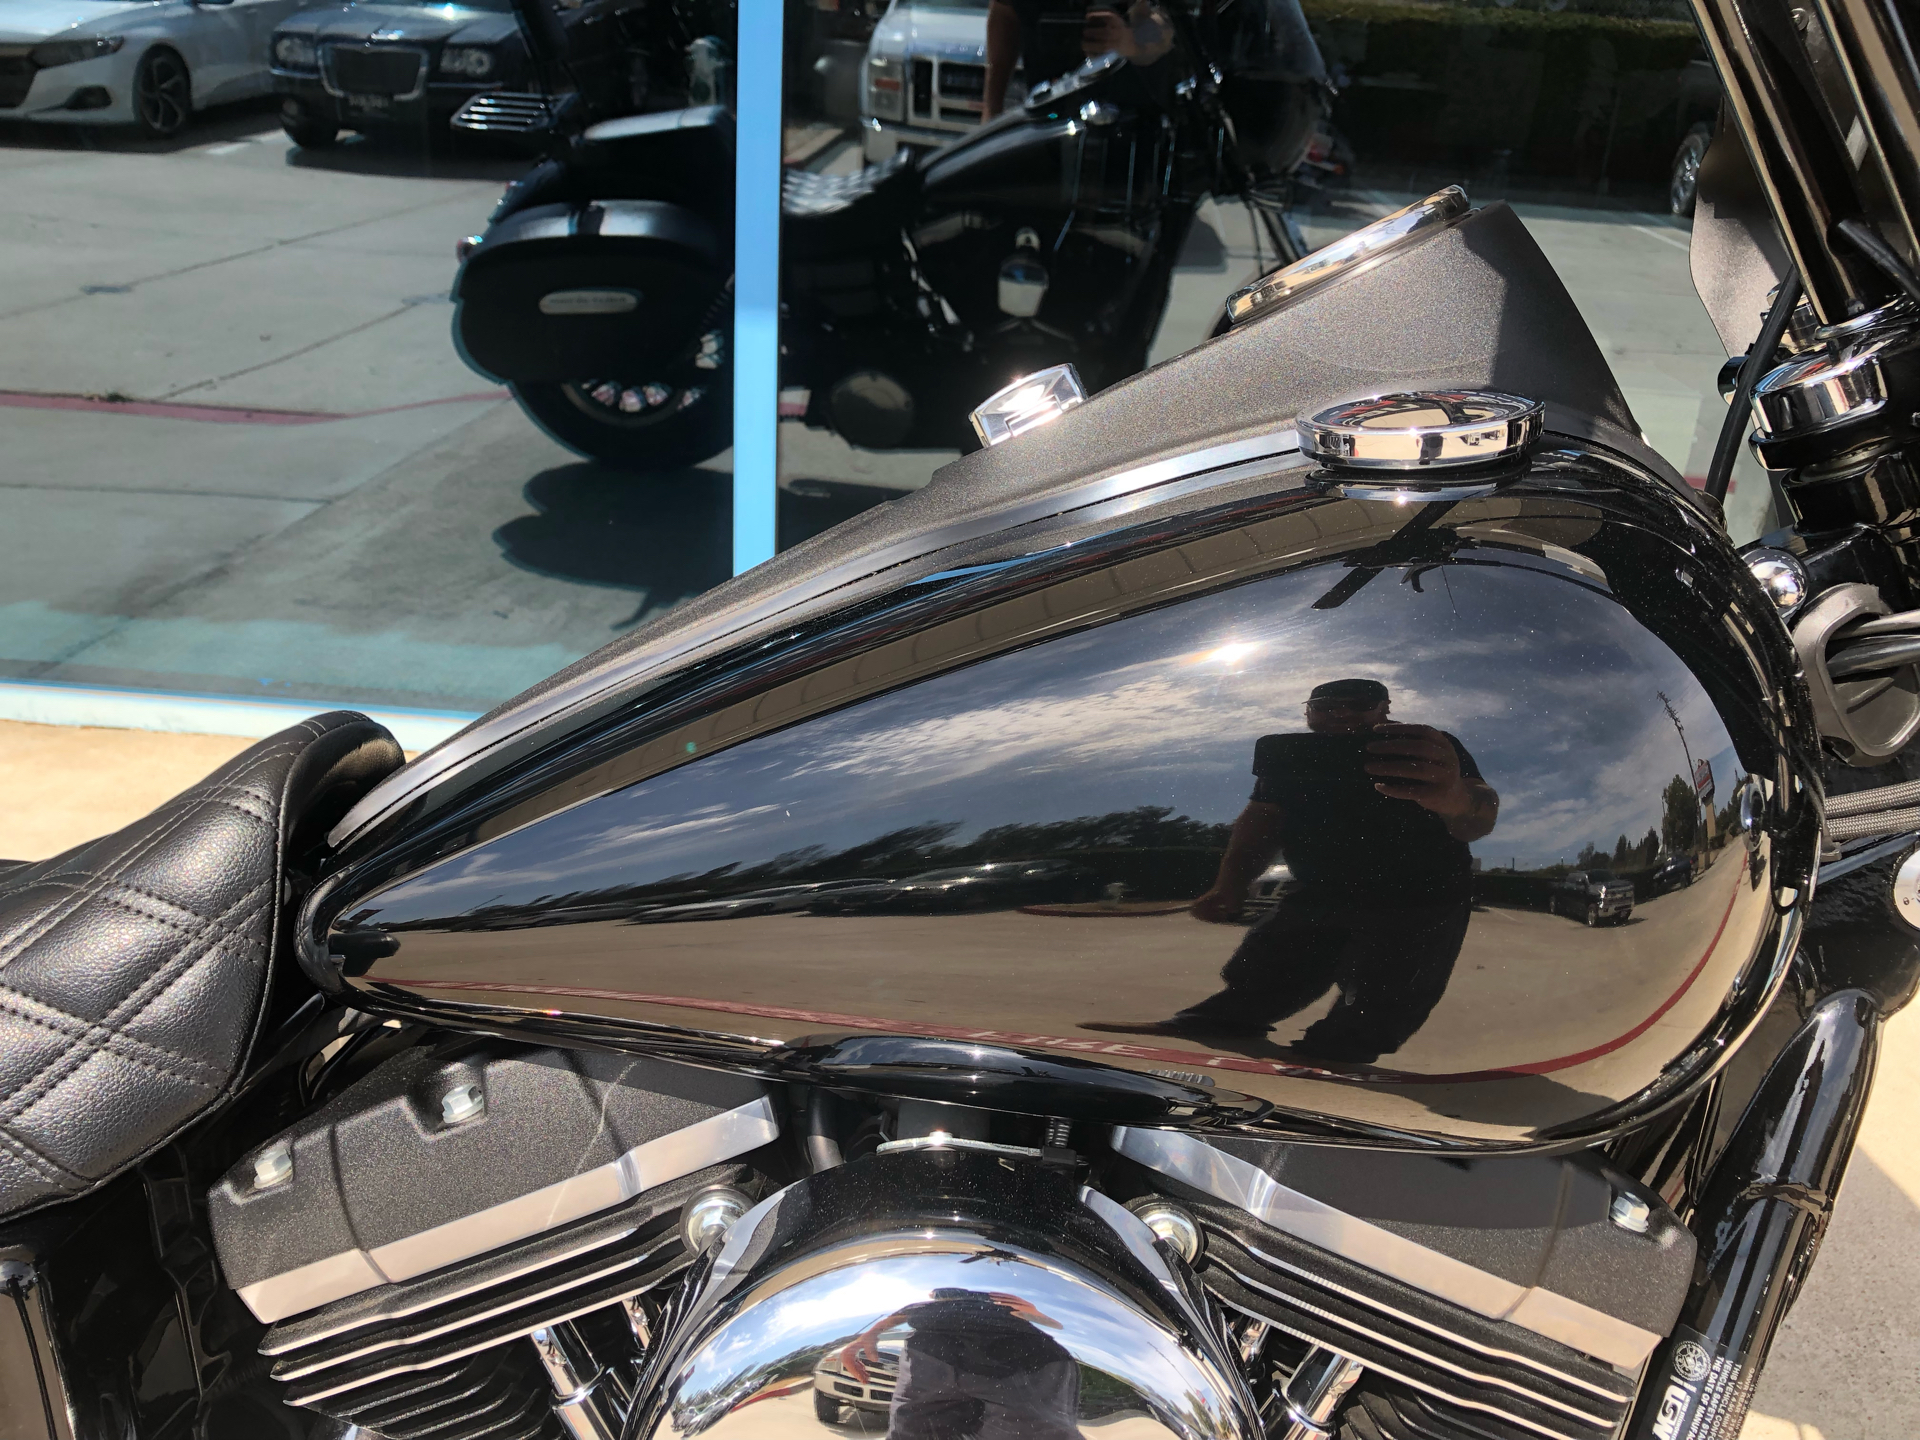 2017 Harley-Davidson Street Bob® in Temecula, California - Photo 6